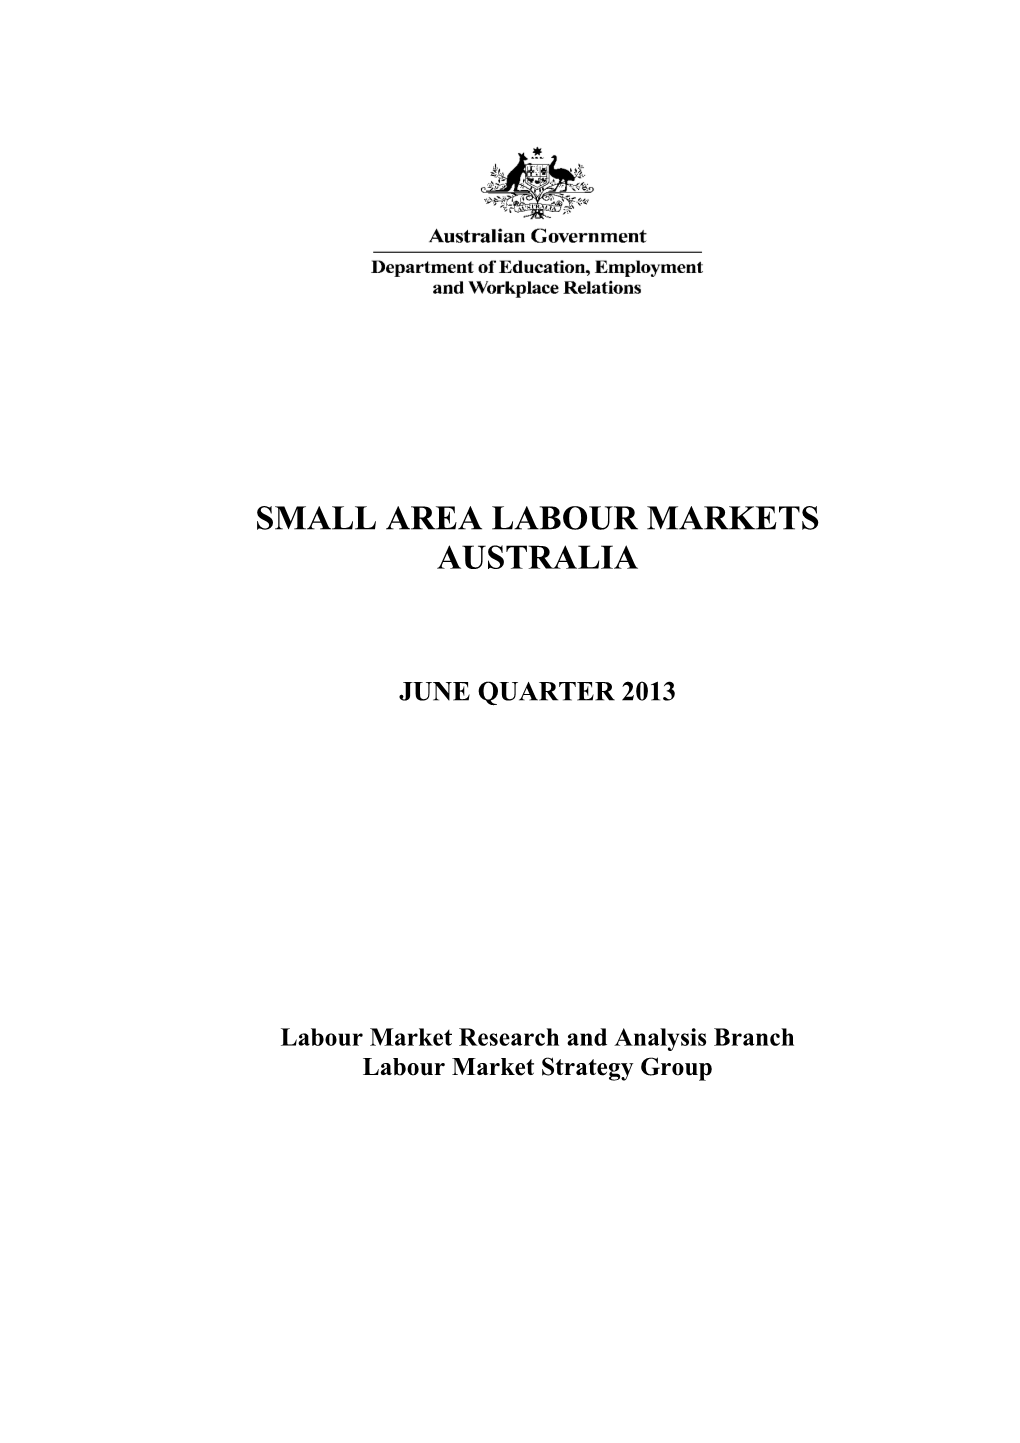 Small Area Labour Markets June Quarter 20131